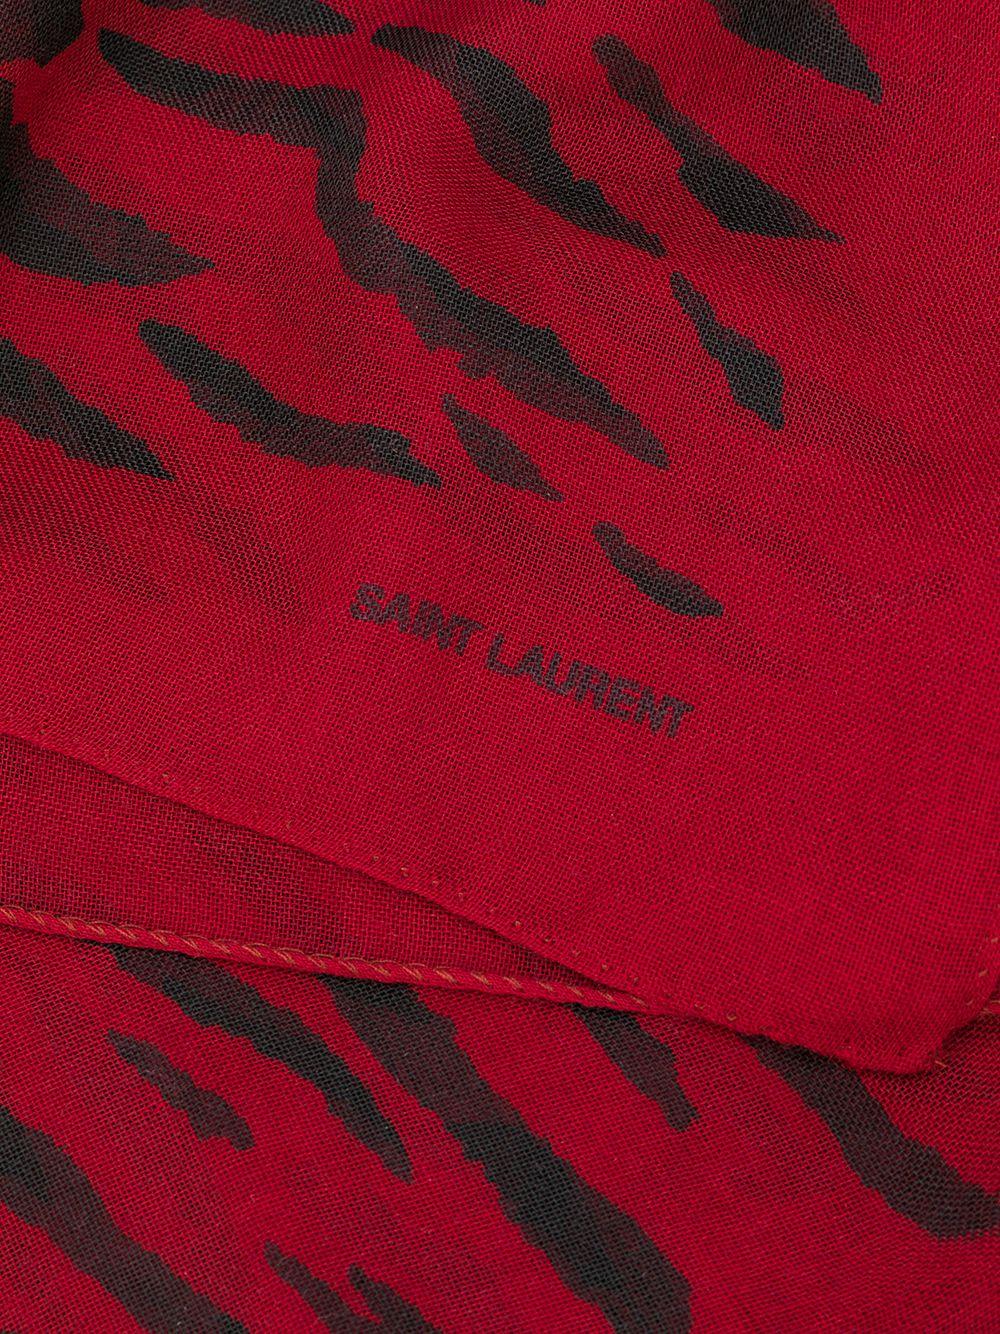 Saint Laurent FW19 Thin Cashmere Large Square Red & Black Zebra Scarf 1